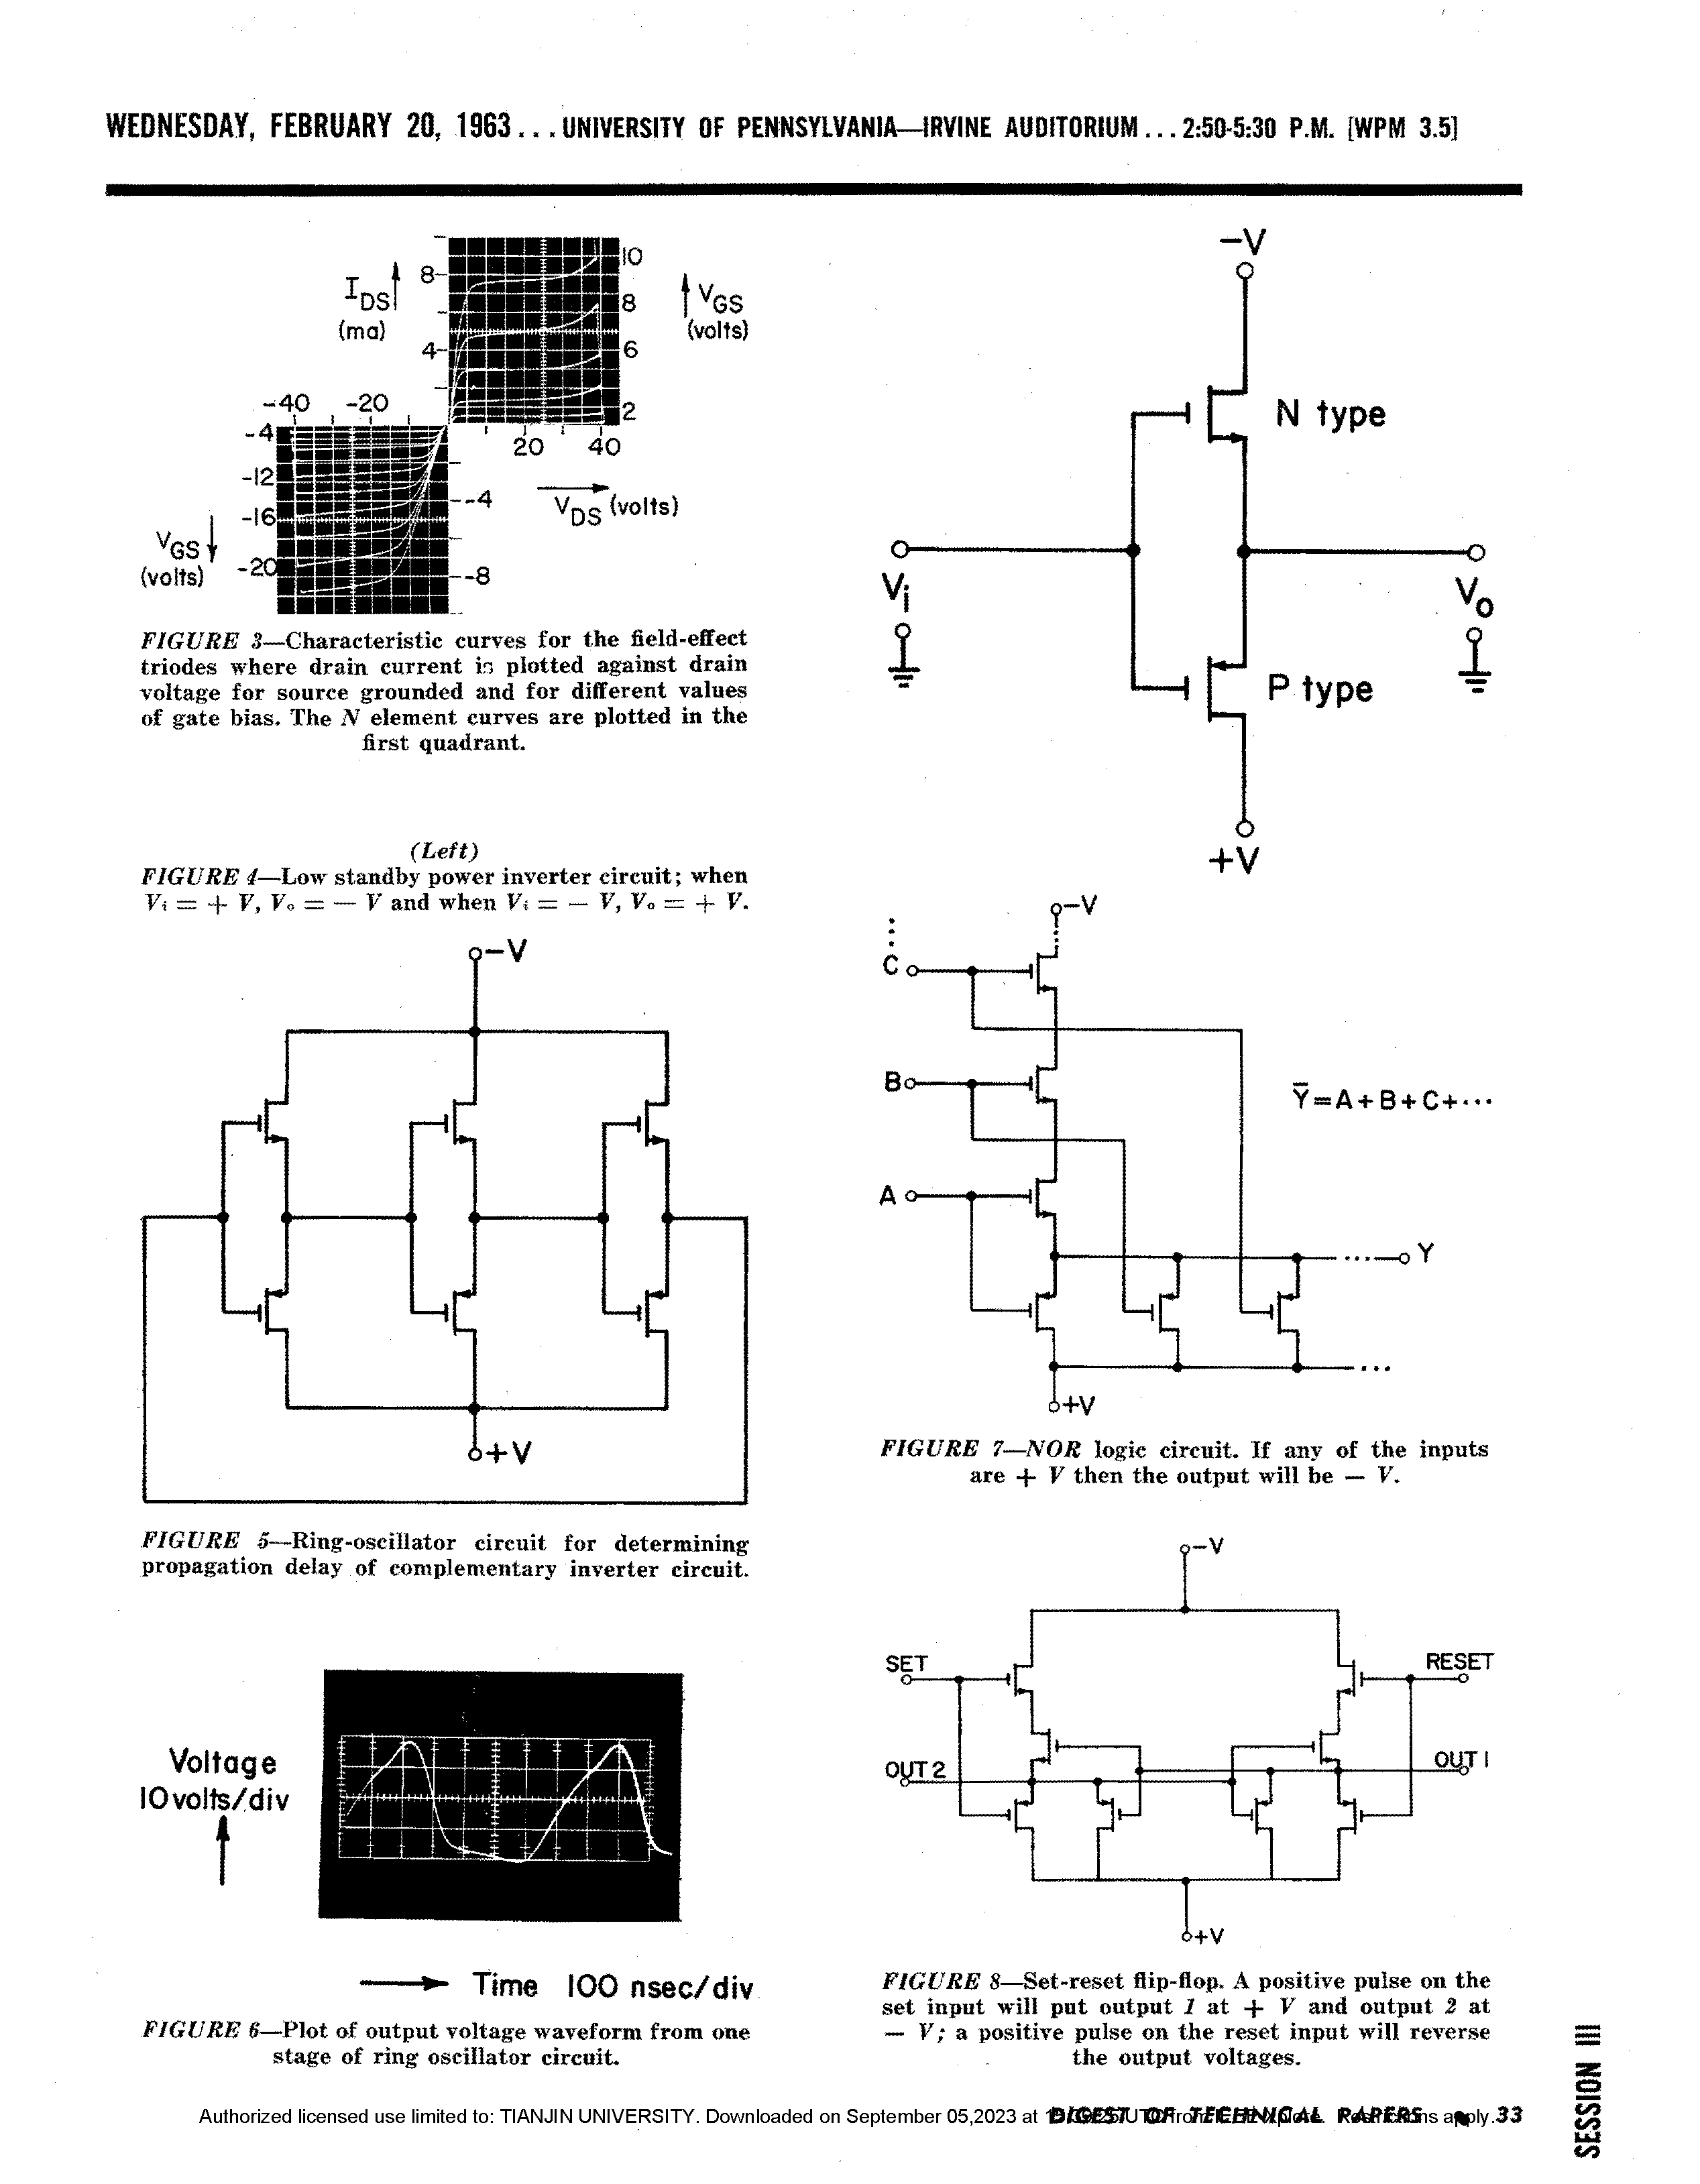 Wanlass Sah 1963 Nanowatt logic using field-effect metal-oxide semiconductor tri.png